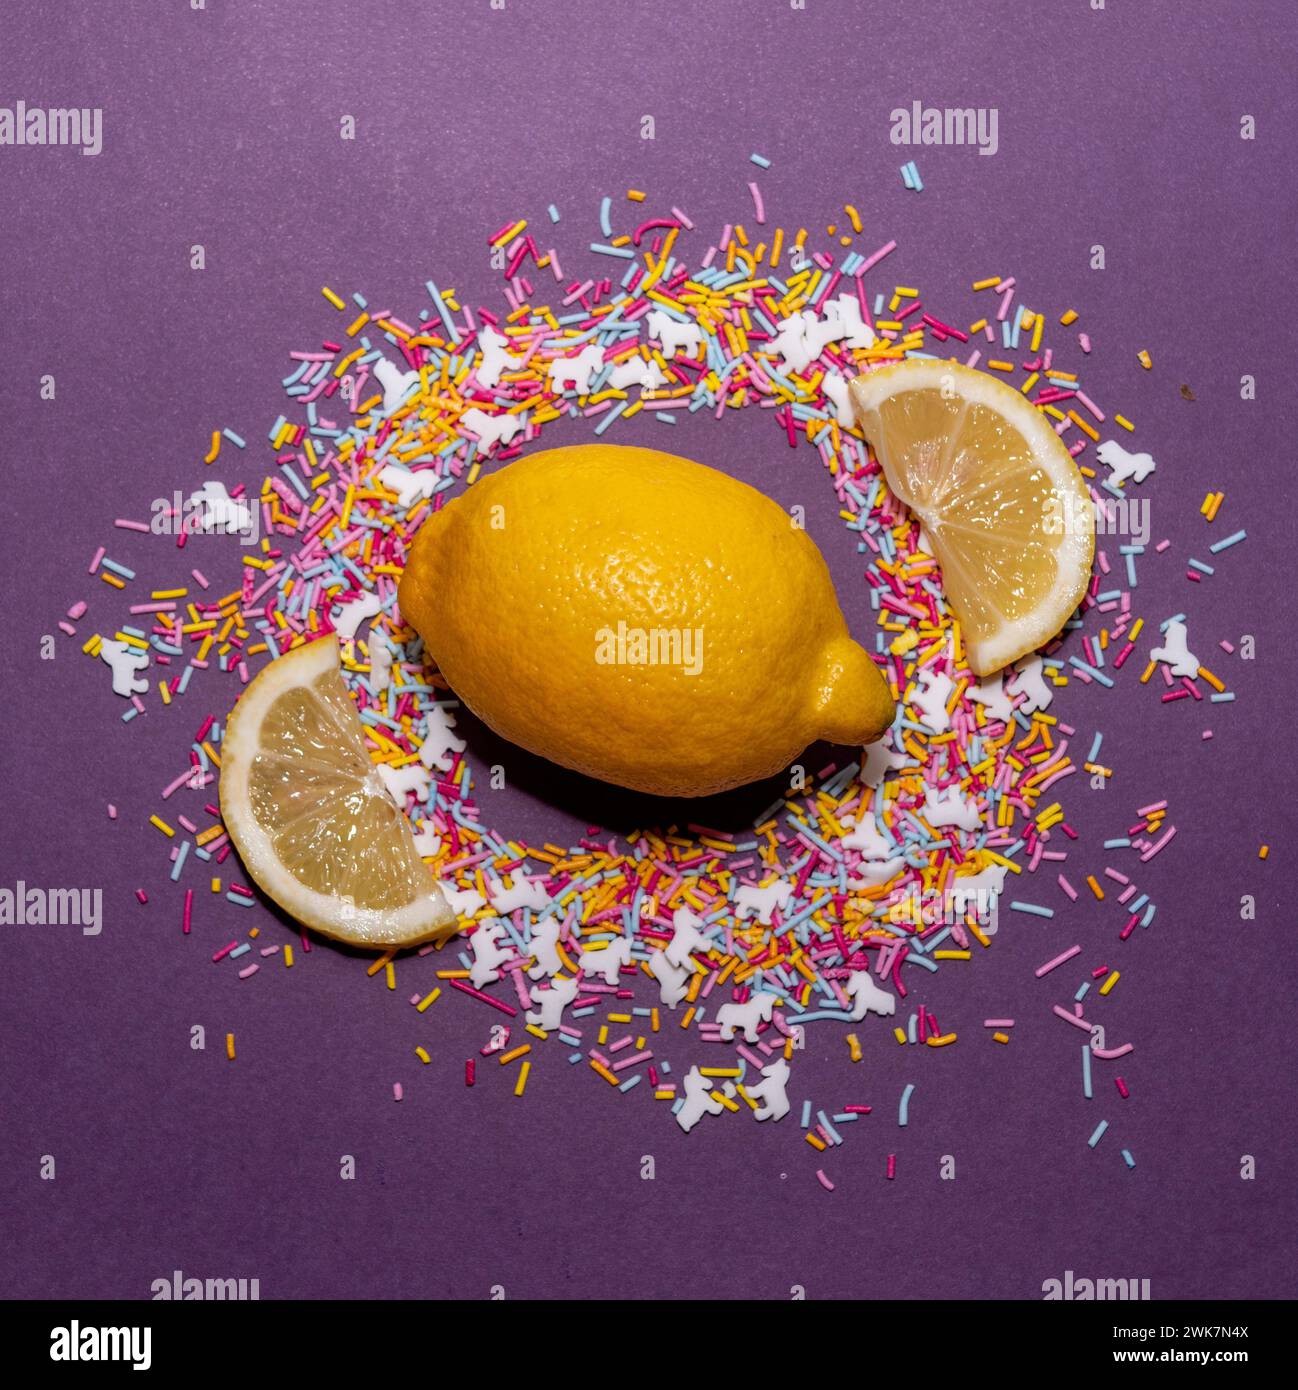 lemon and sprinkles creative layout. Food photography. Studio shot. Stock Photo